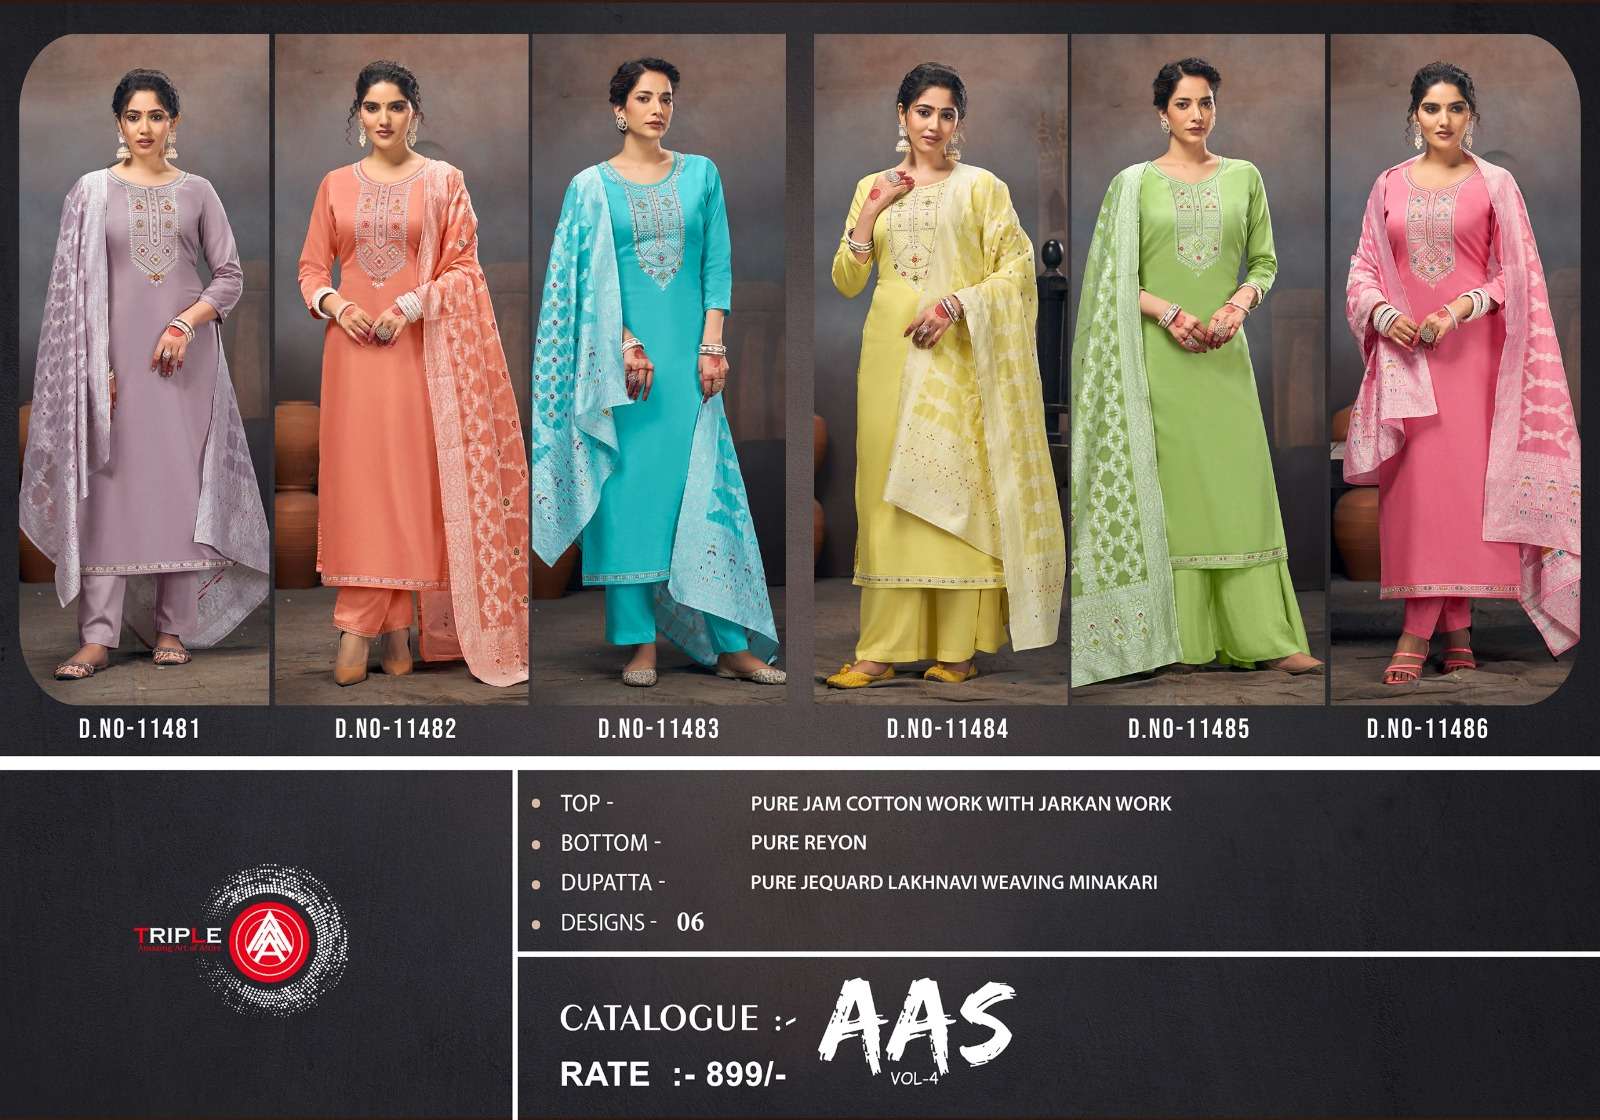 triple aas vol 4 jam cotton regal look salwar suit catalog